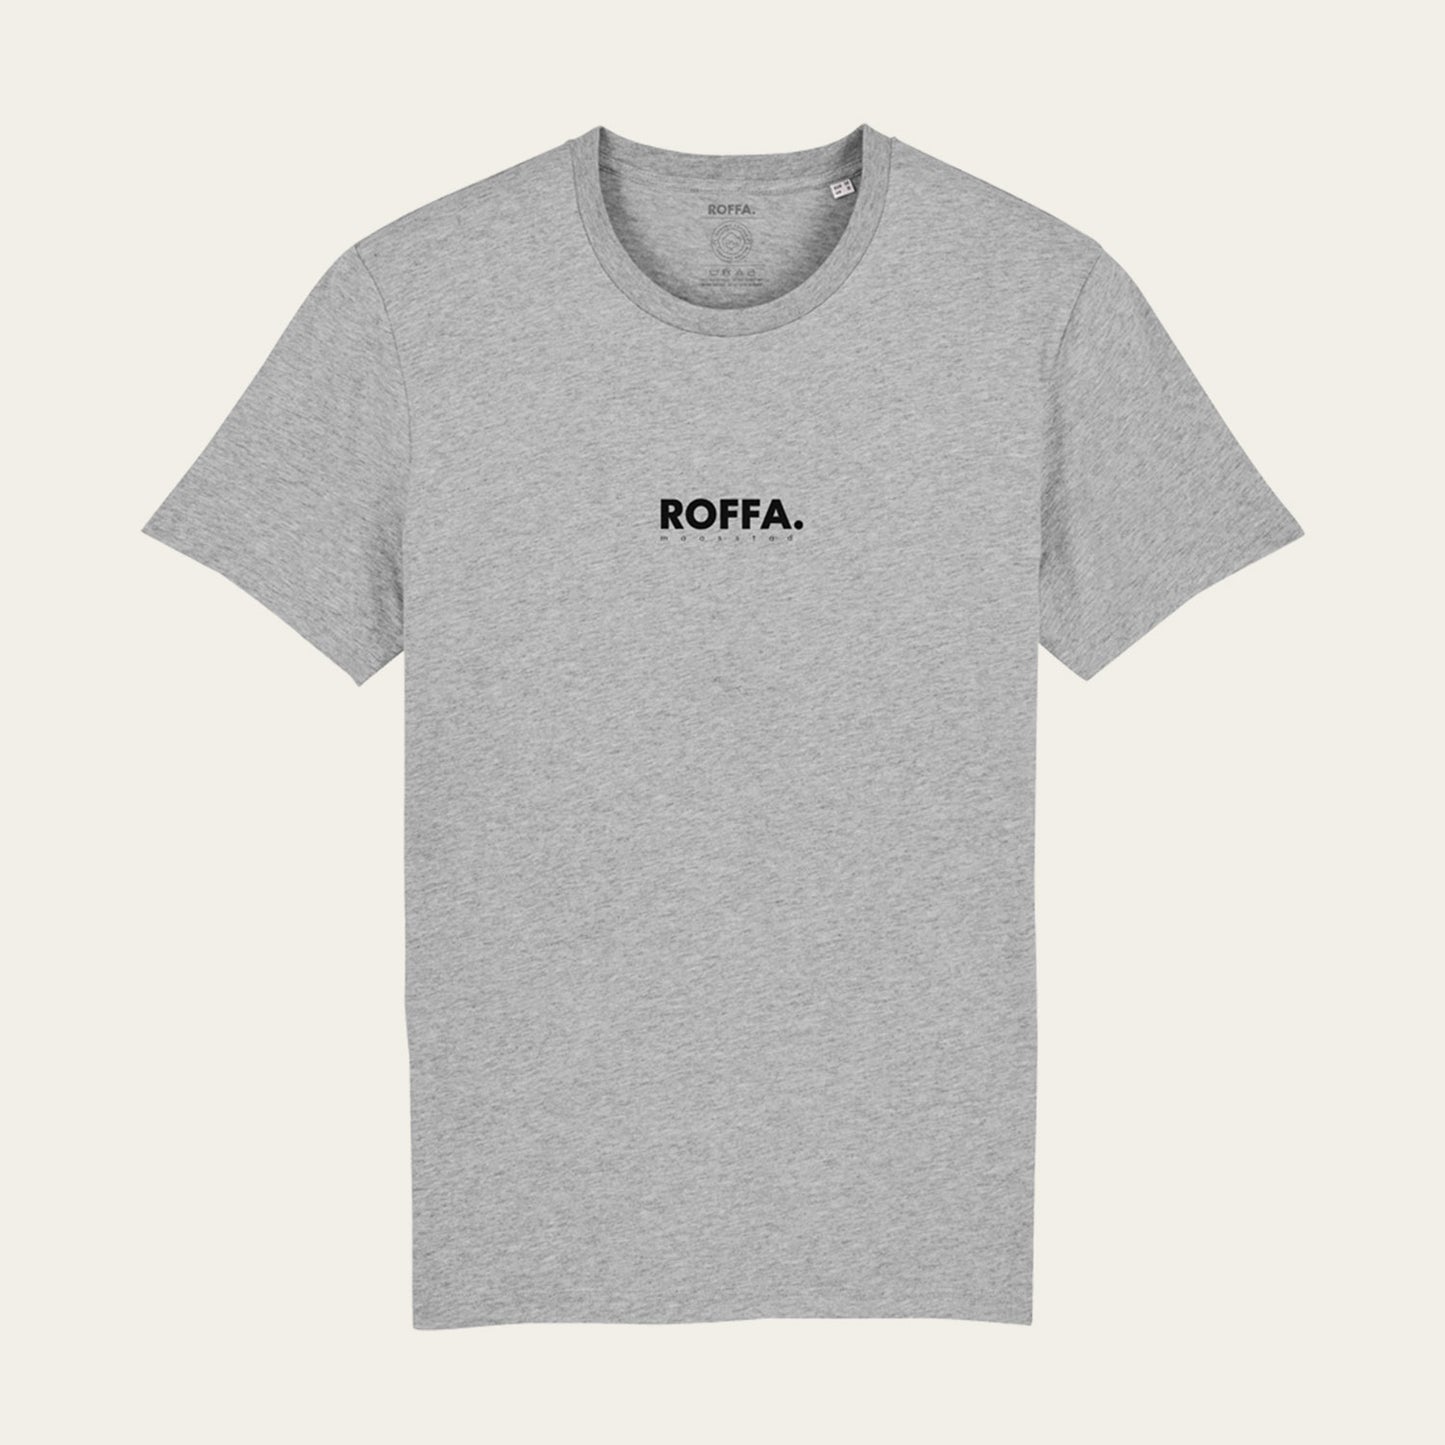 Grijs t-shirt met groot ROFFA. rotterdam logo